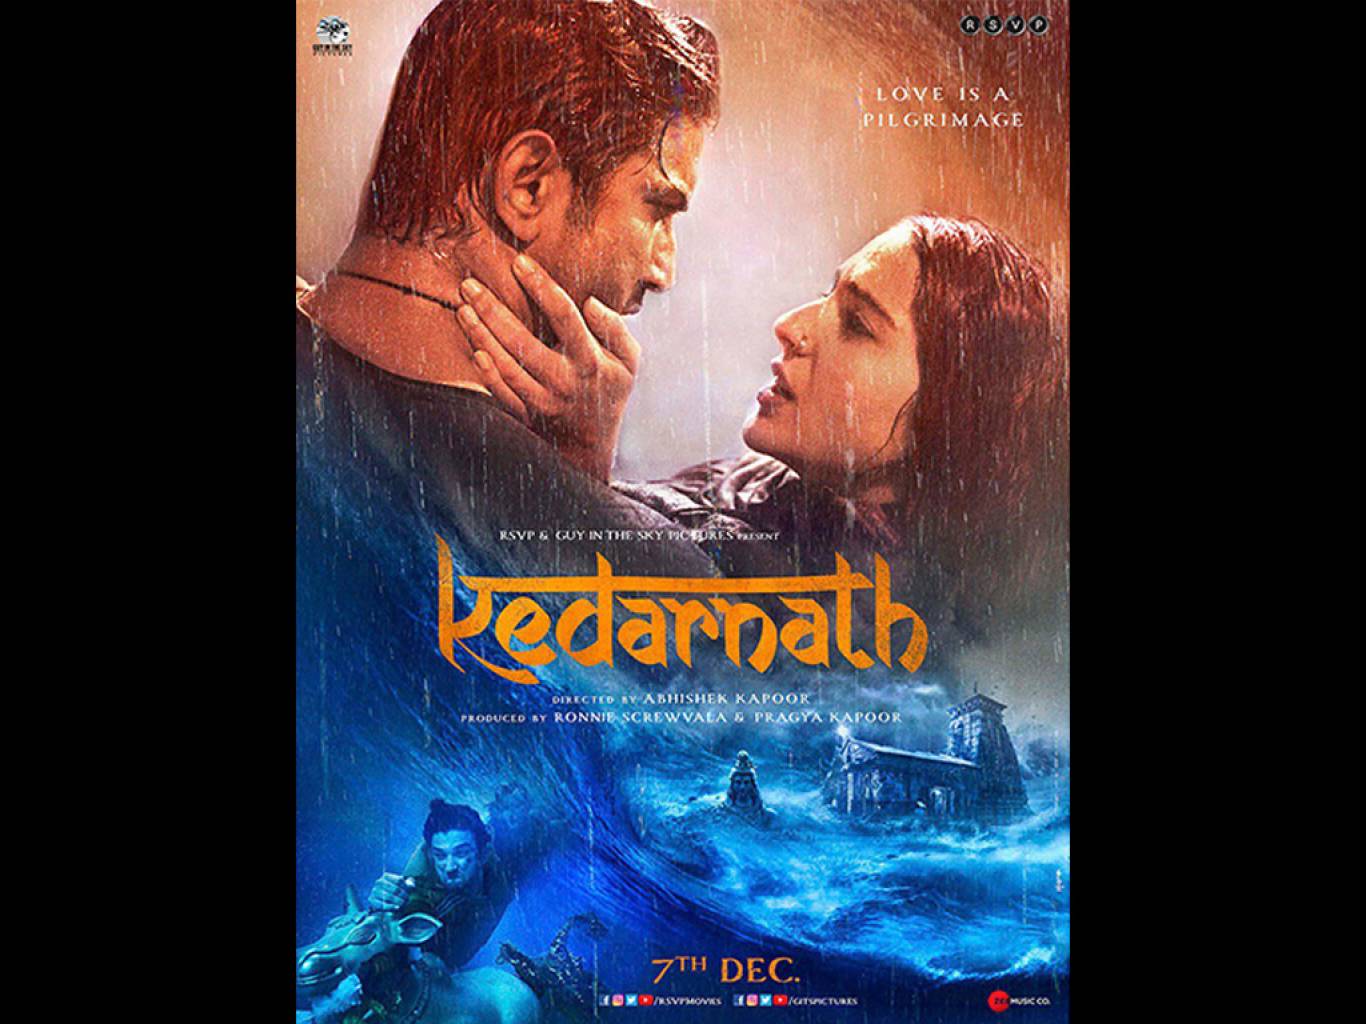 Kedarnath Movie HD Wallpaper. Kedarnath HD Movie Wallpaper Free